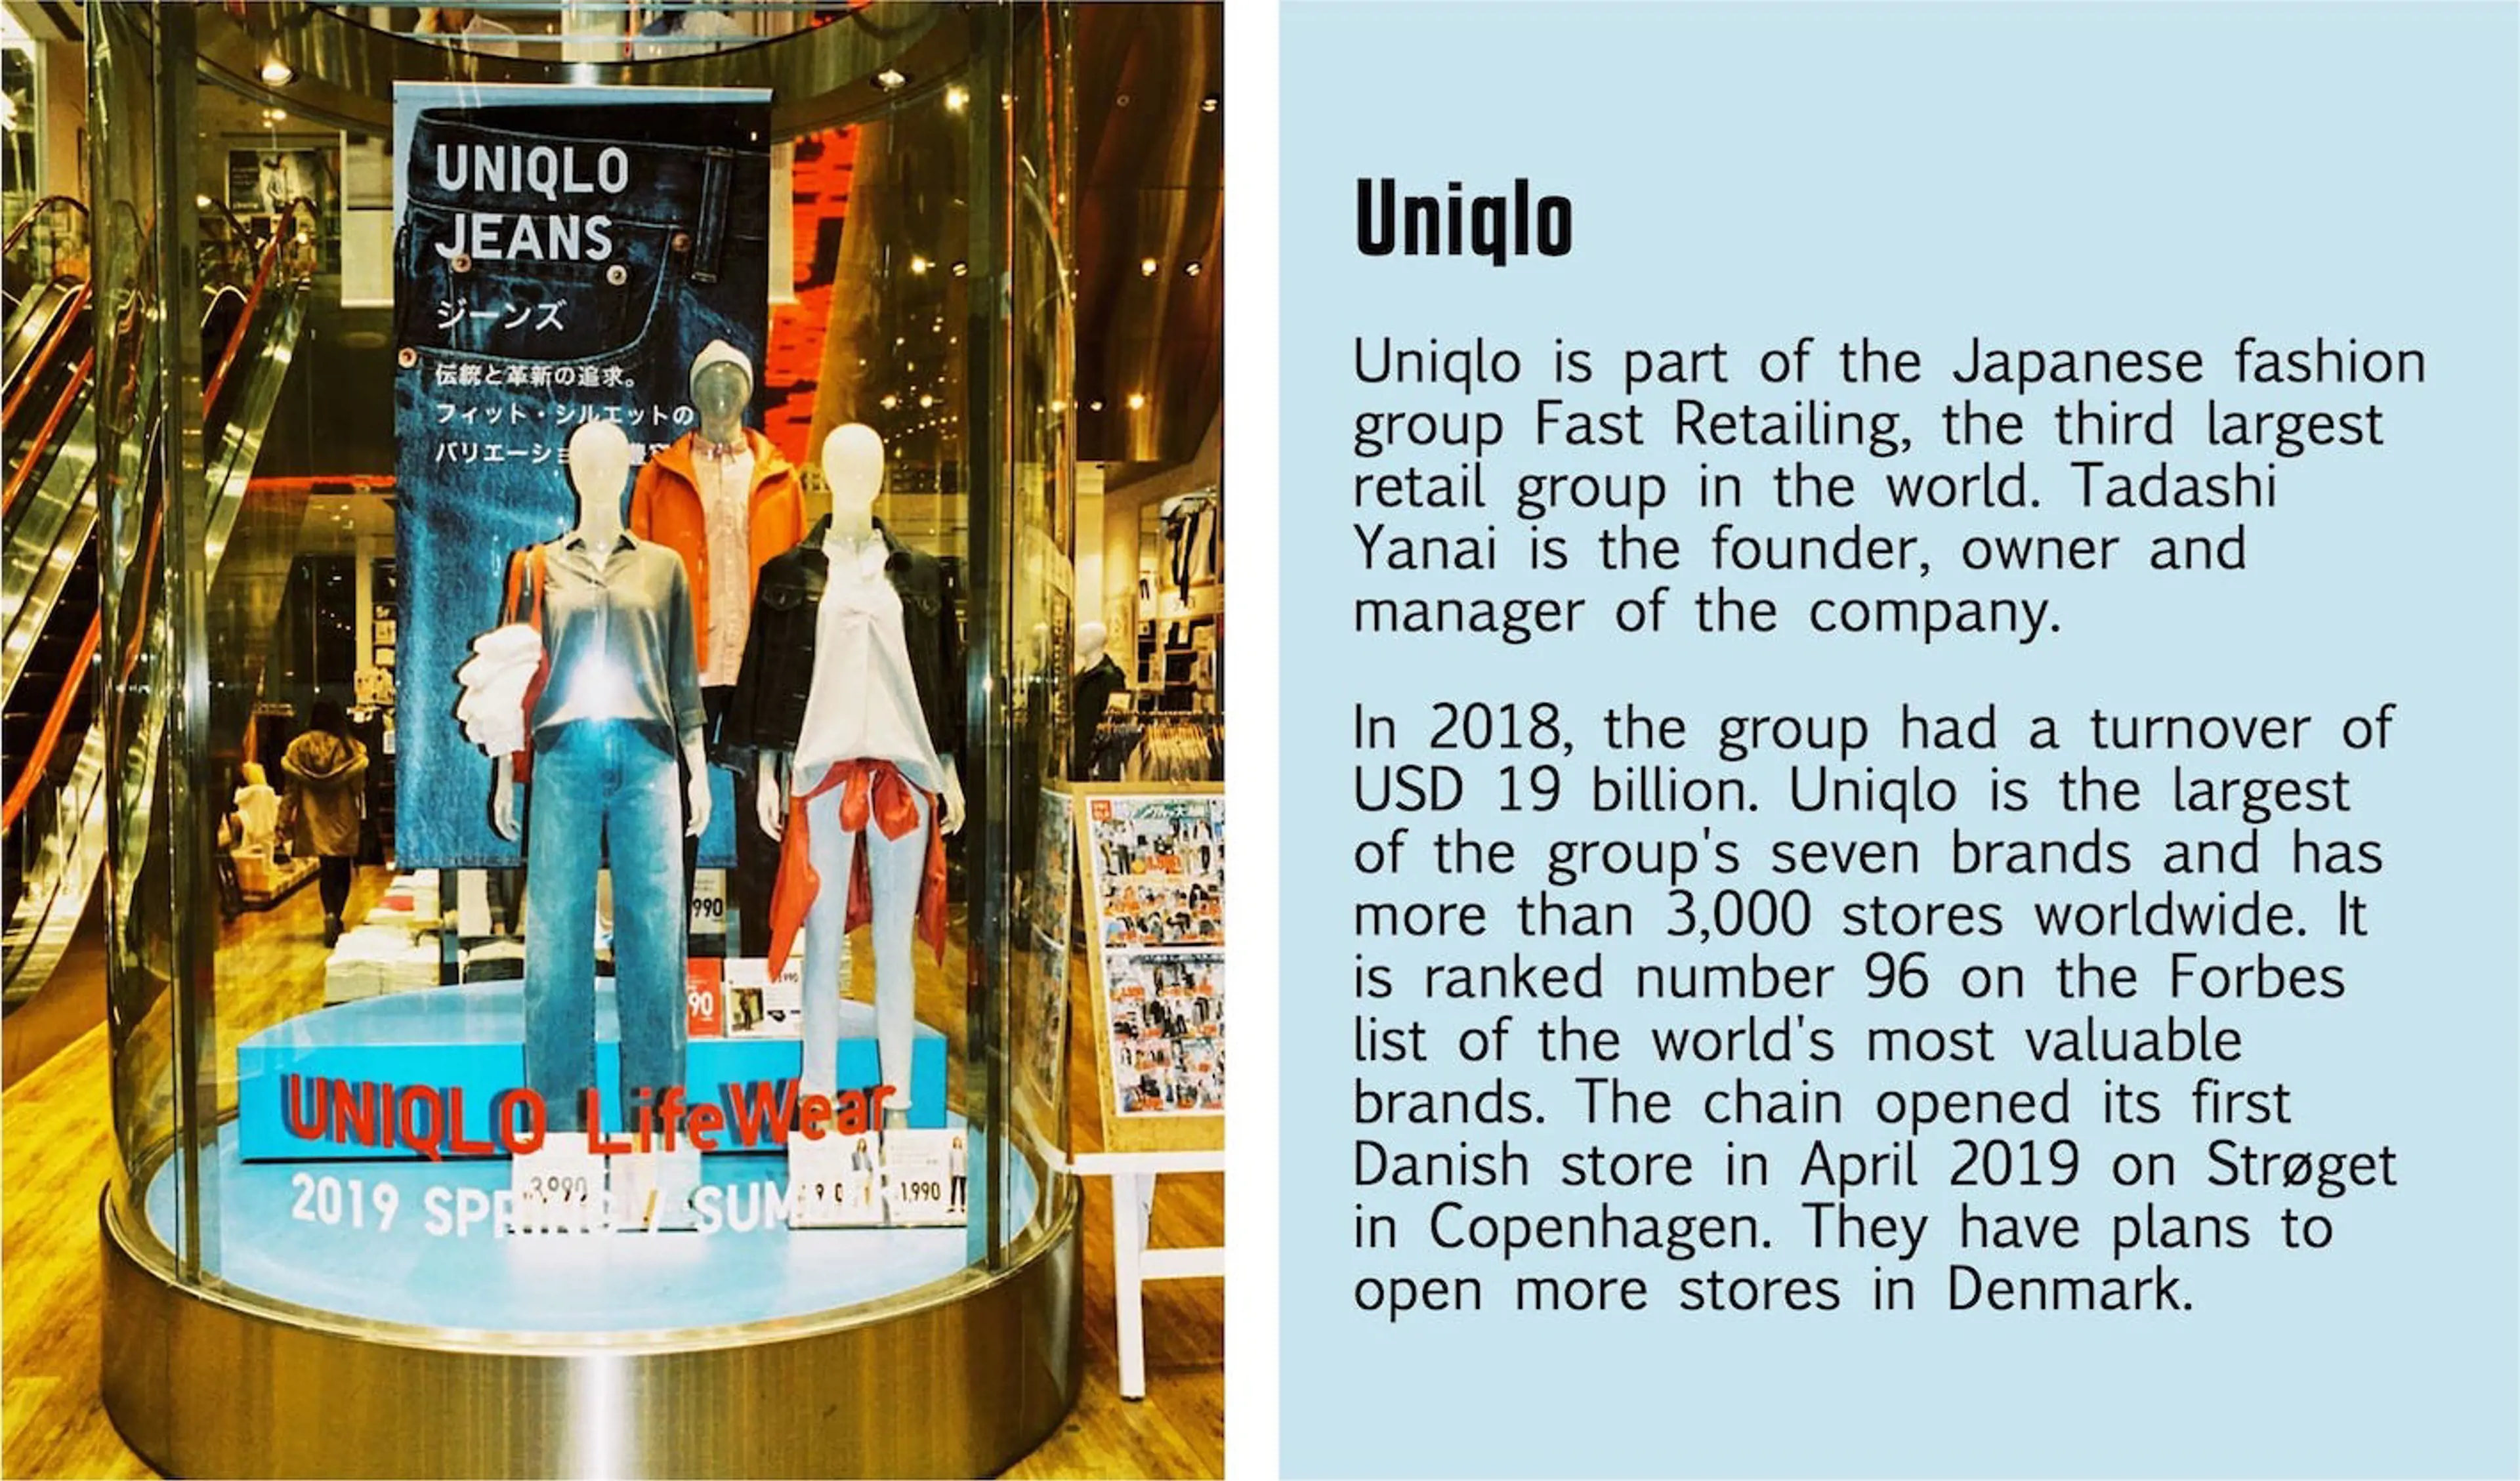 A Uniqlo store window and short presentation of the company in English